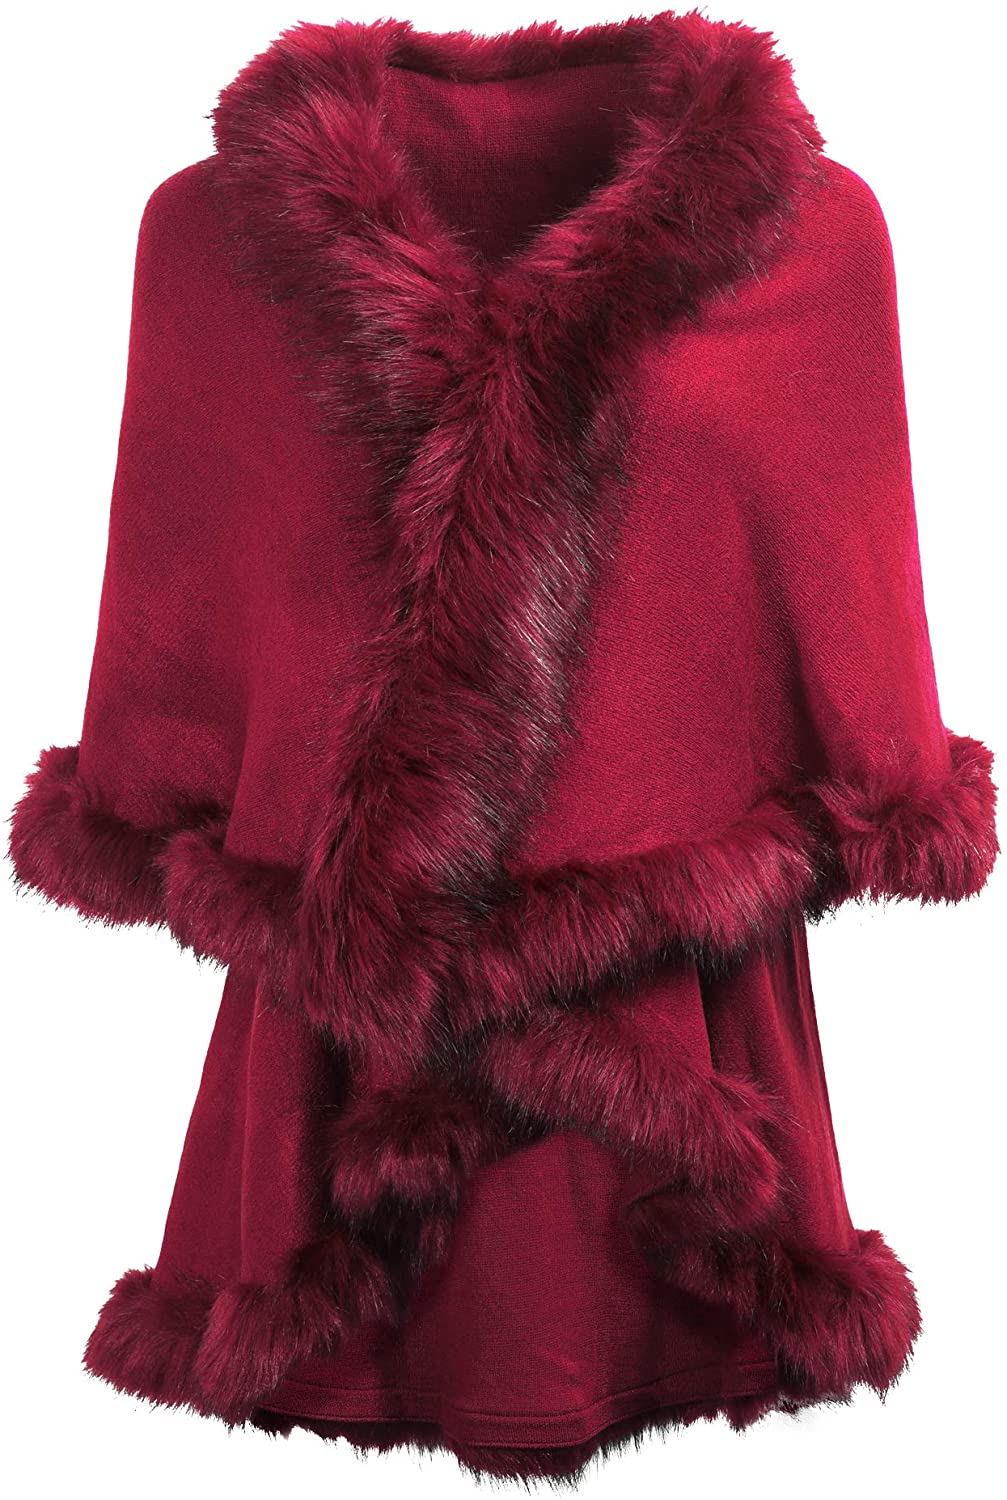 ZLYC Women Fine Knit Open Front Faux Fur Trim Layers Poncho Cape Cardigan Sweater